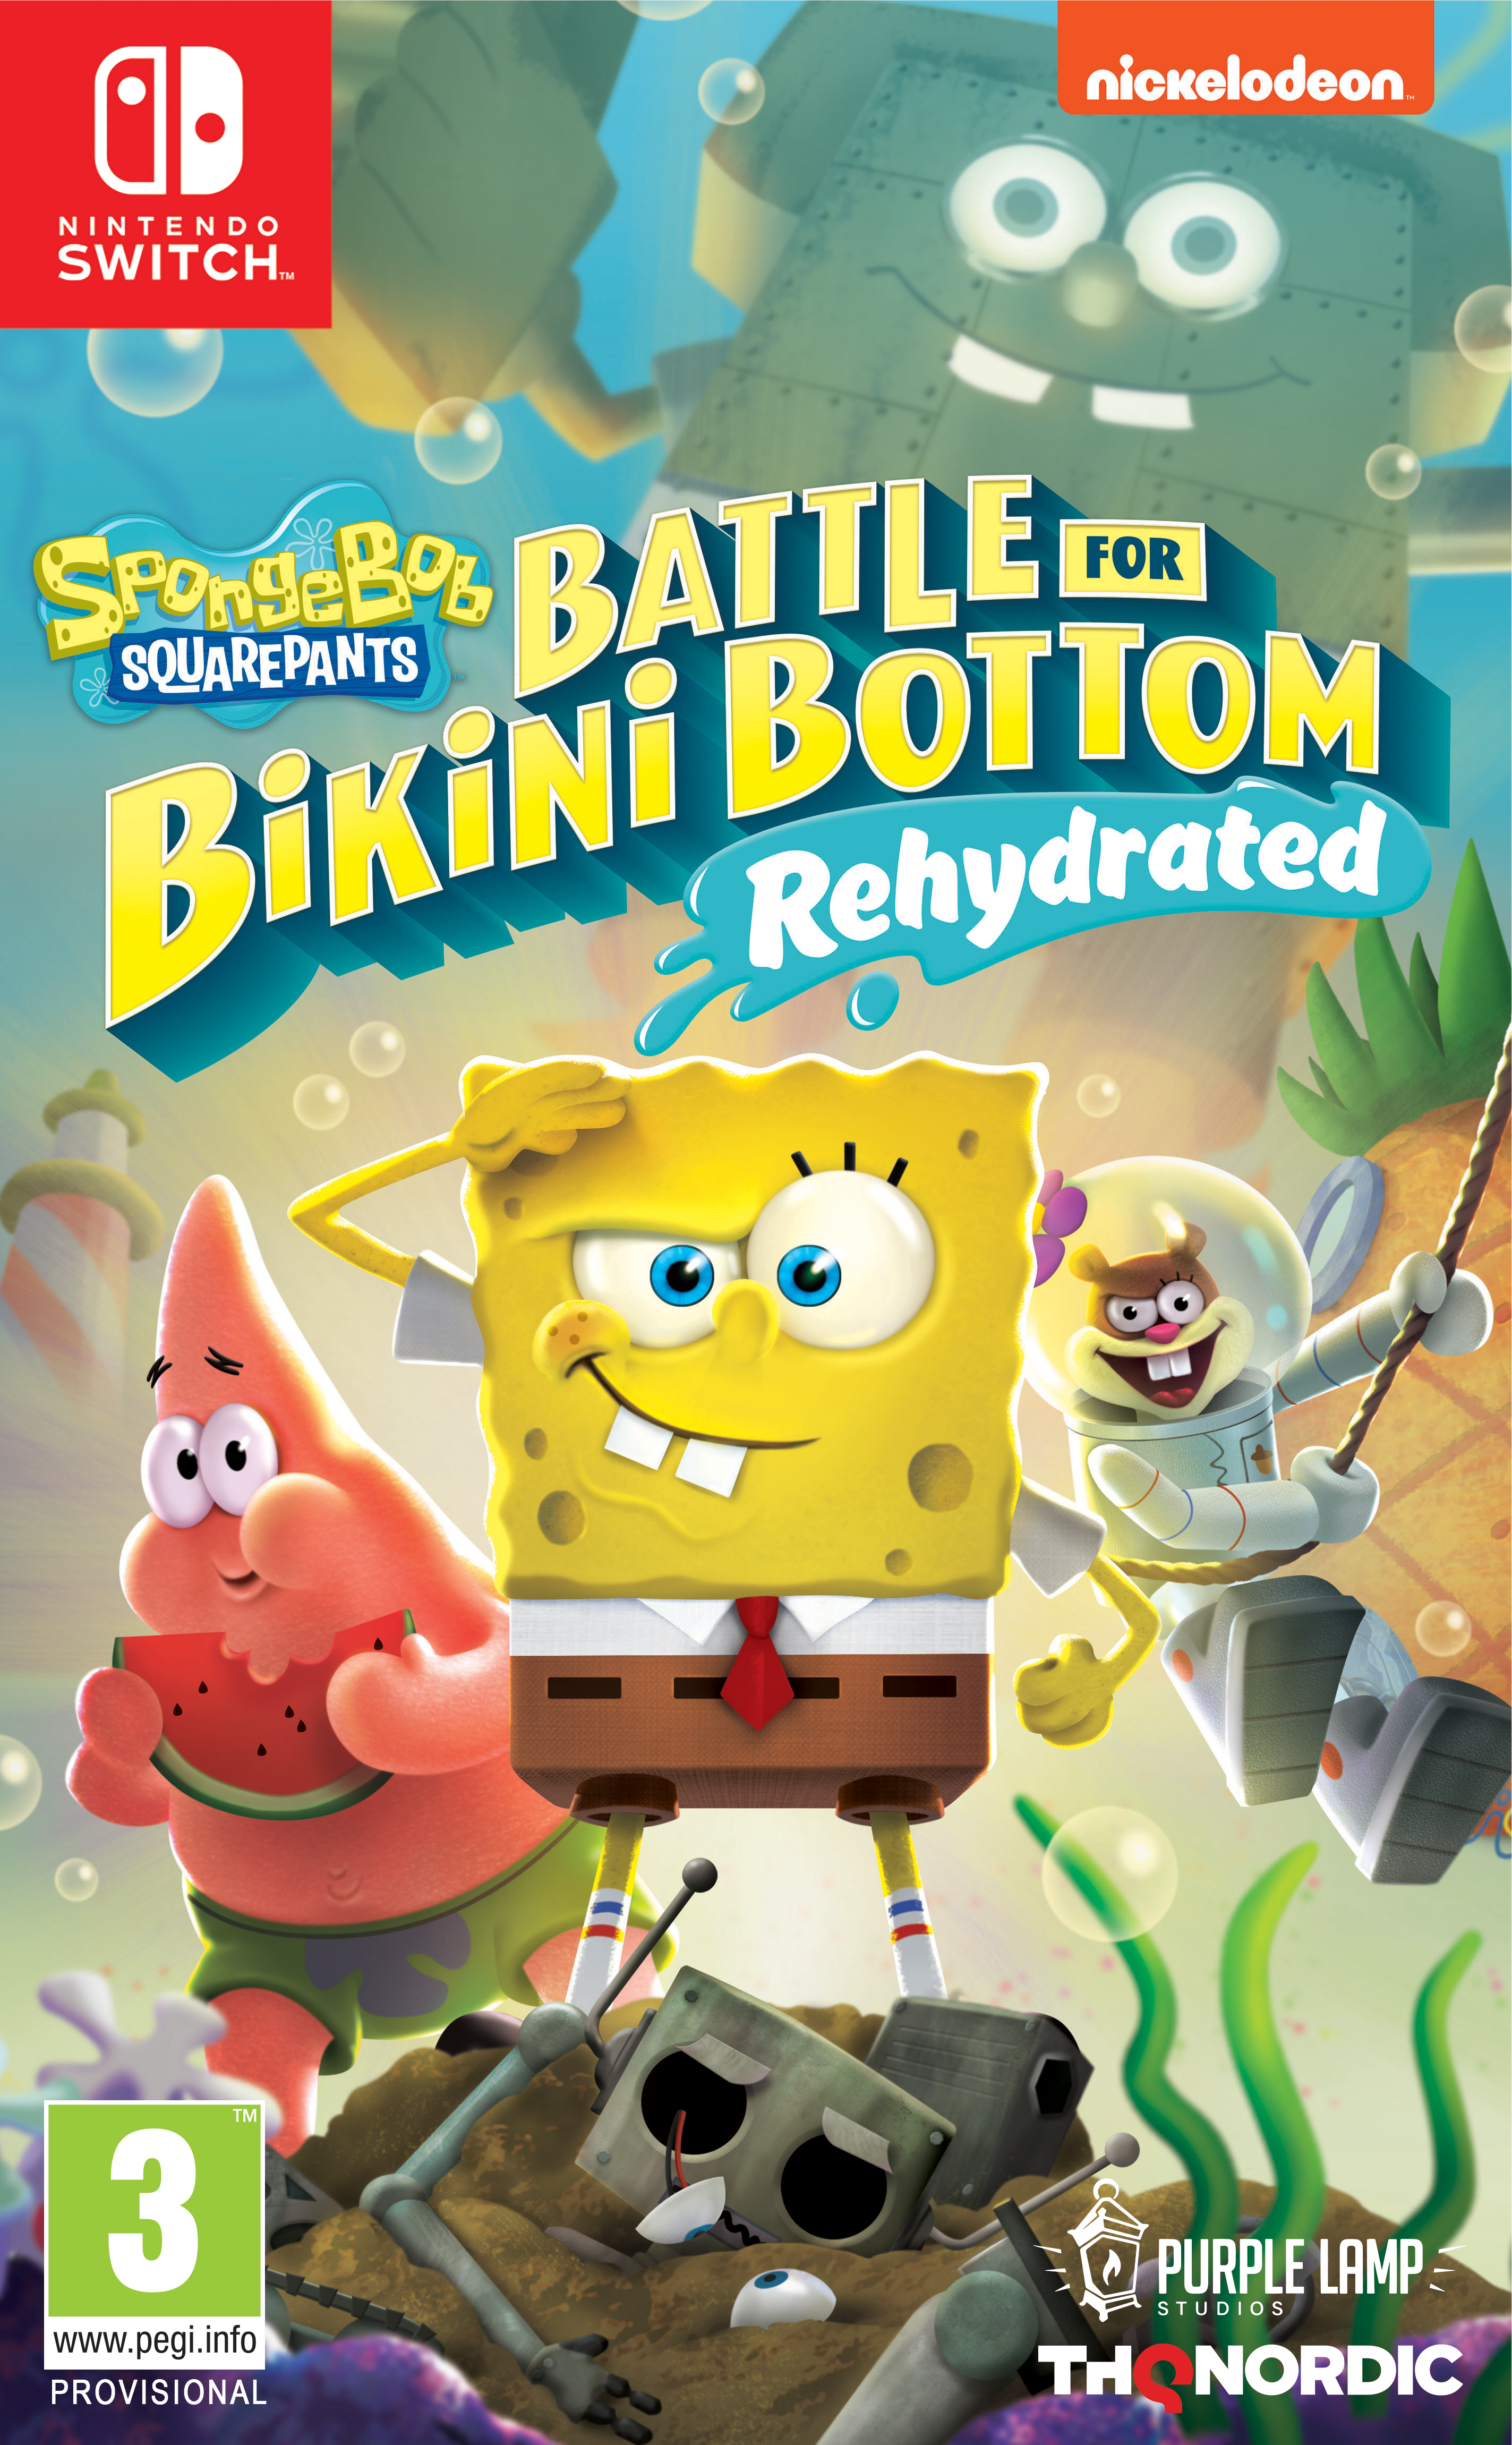 SpongeBob Squarepants: Battle for Bikini Bottom – Rehydrated